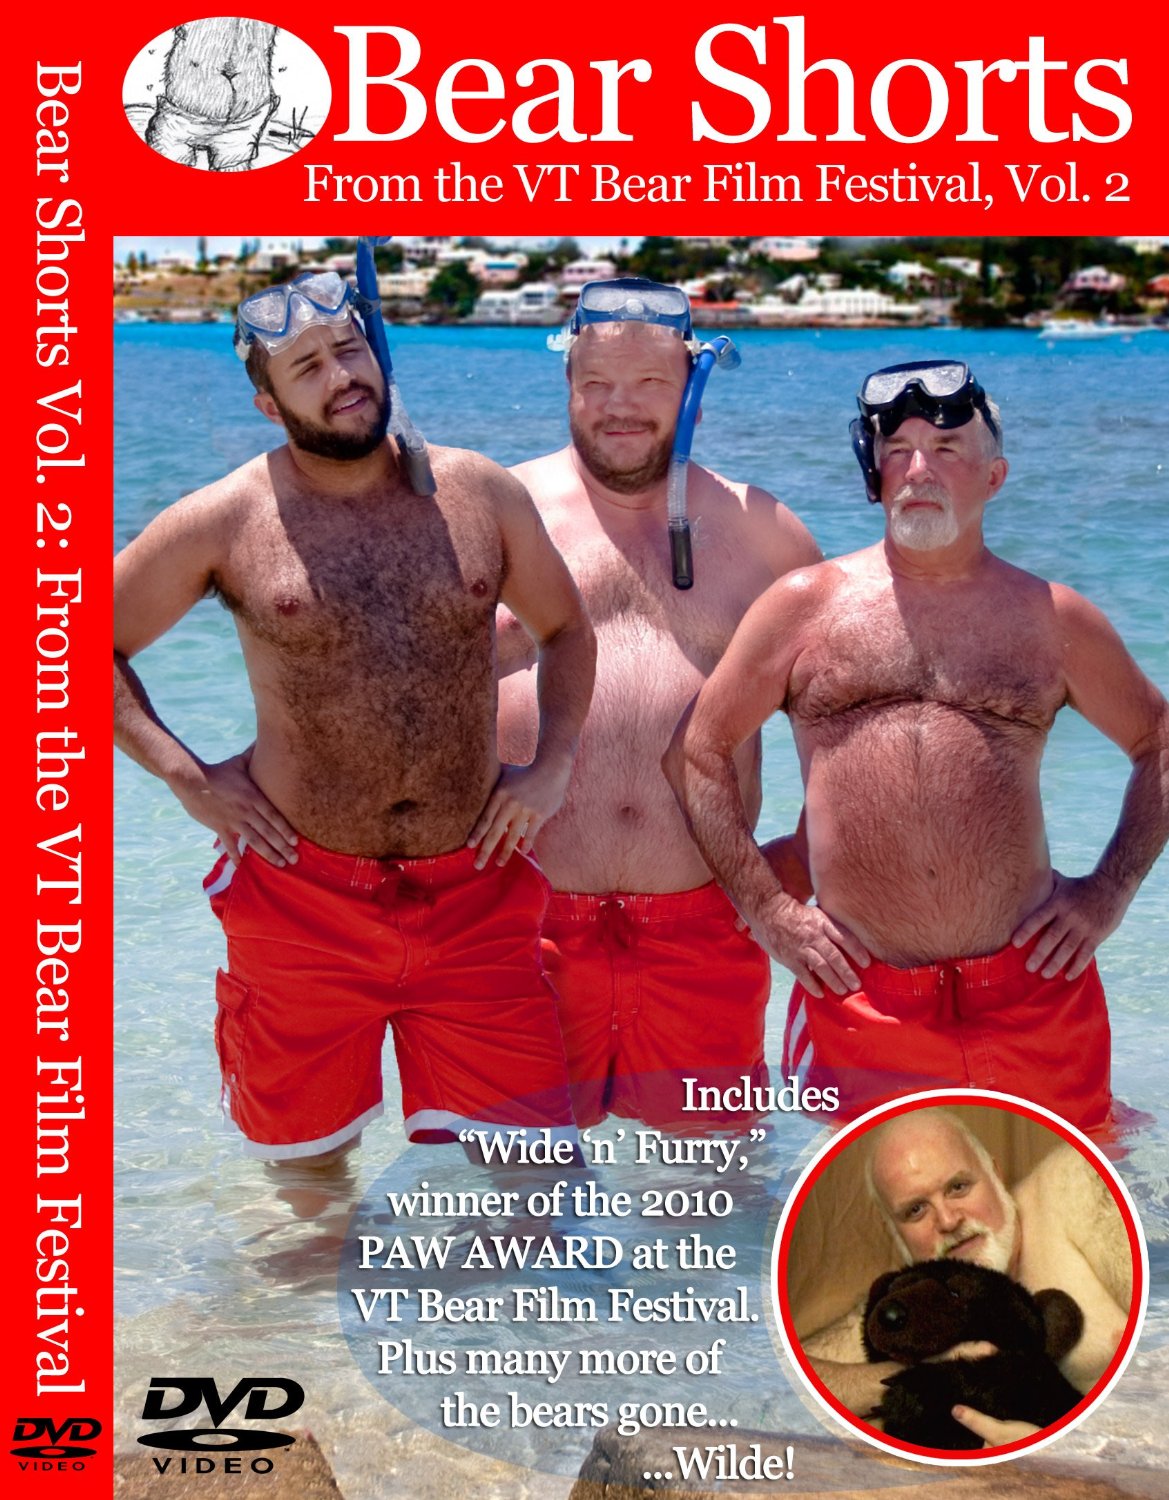 Bear Shorts Vol. 2: Shorts from the Vermont Bear Film Festival